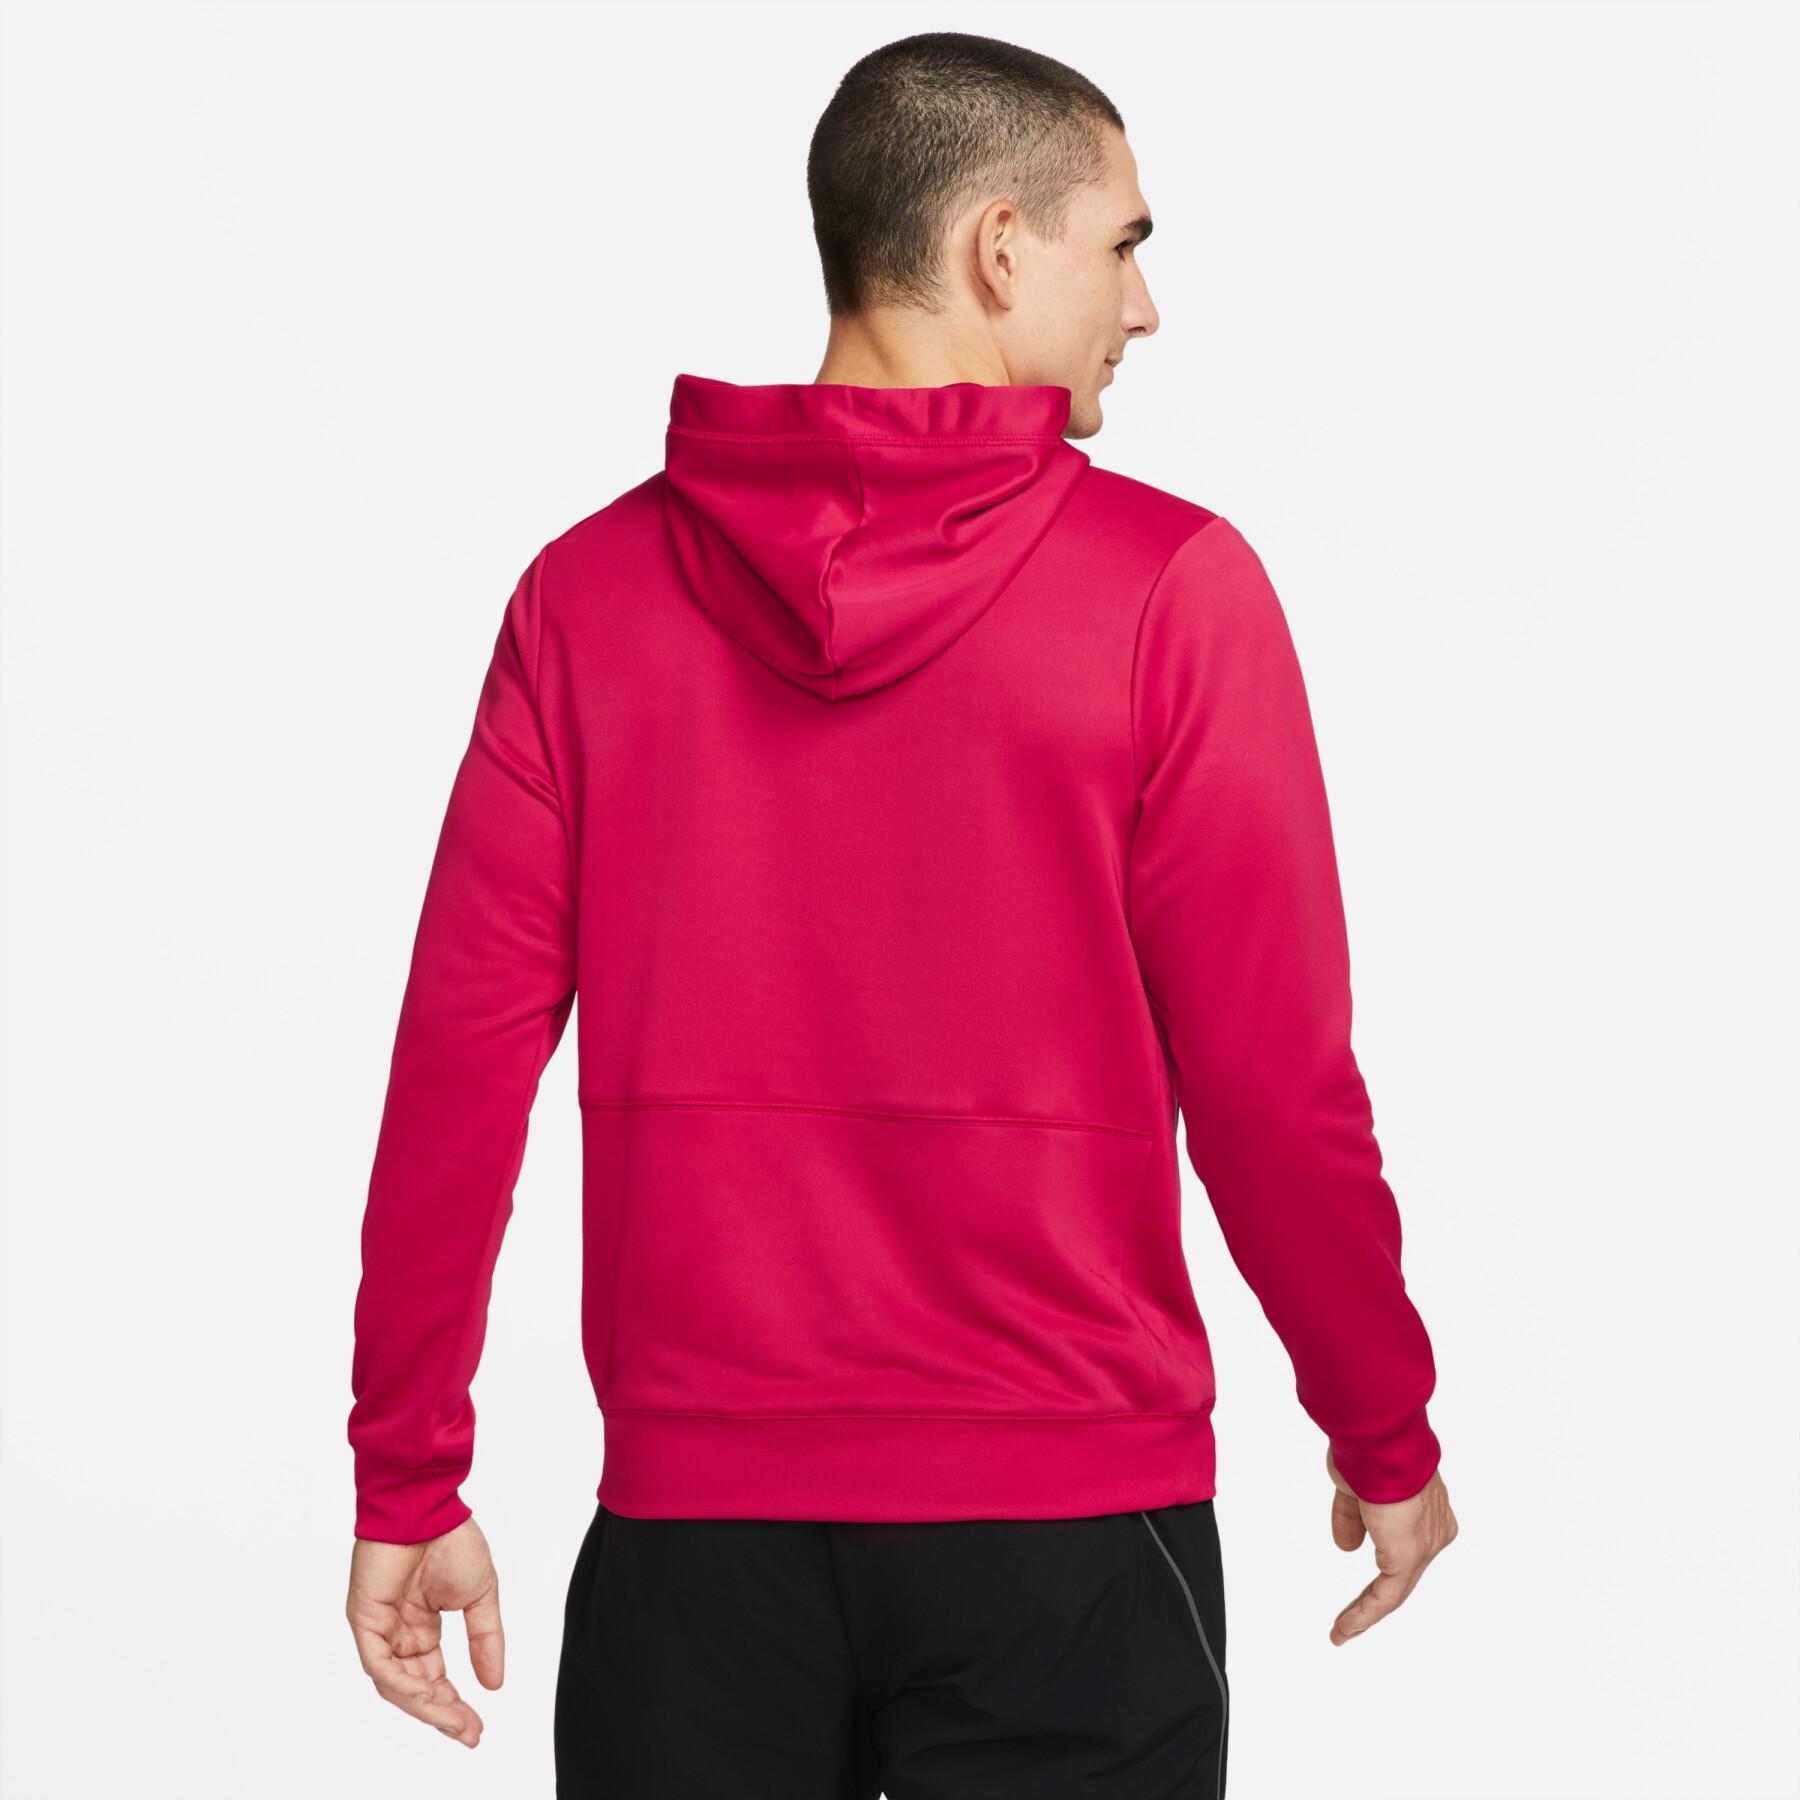 Hooded sweatshirt Nike F.C.